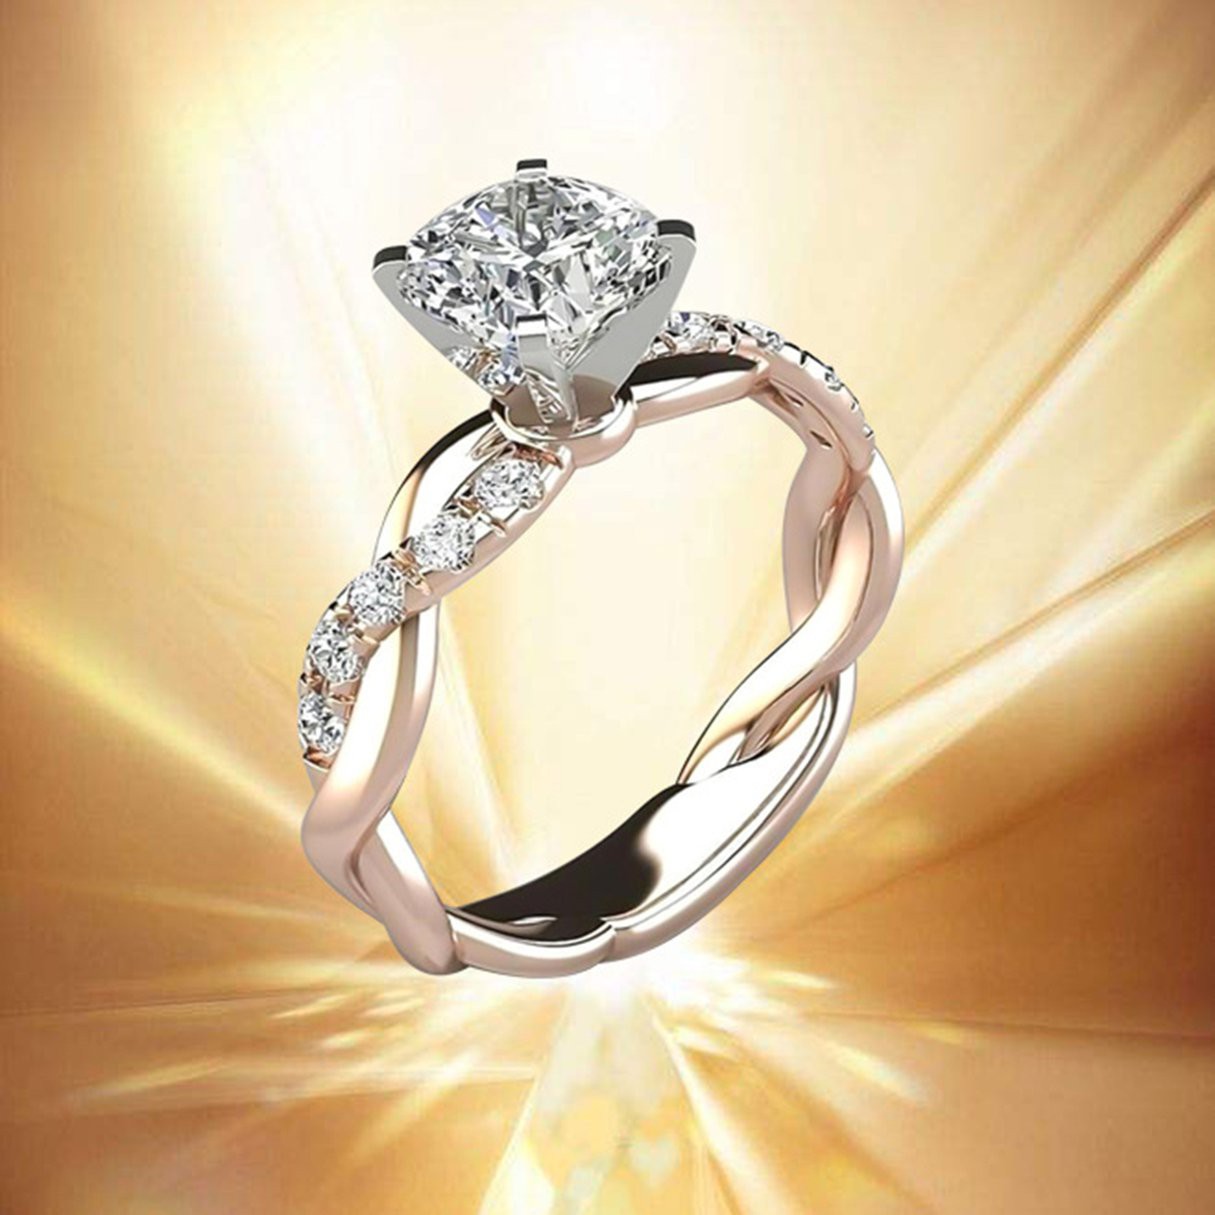 MBB Women's Fashion Ring Two-color Twist Diamond 18k Diamond Ring Rose Gold